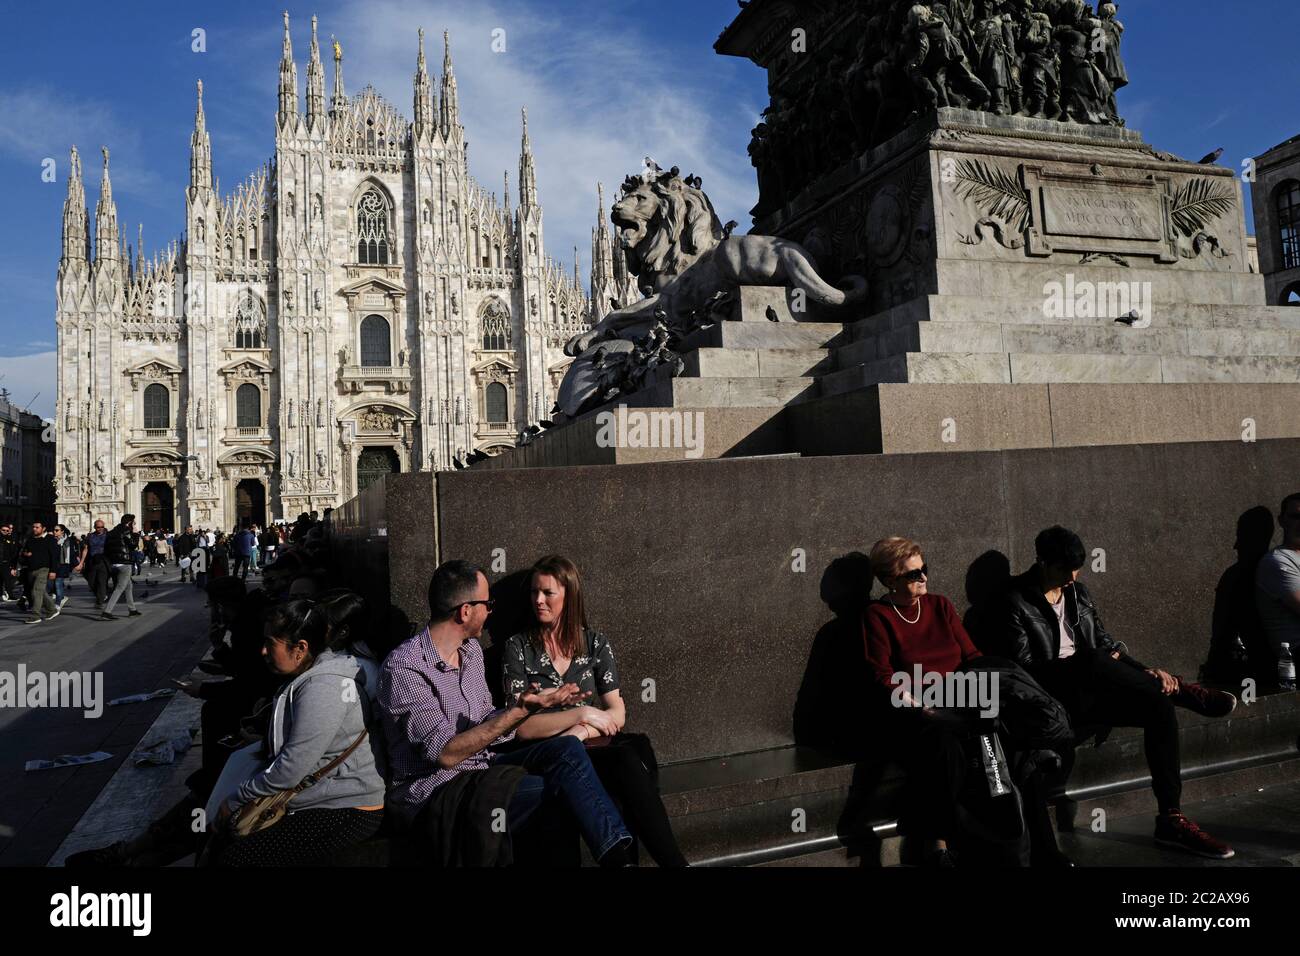 People gathering in Duomo's square, In Milan. Stock Photo